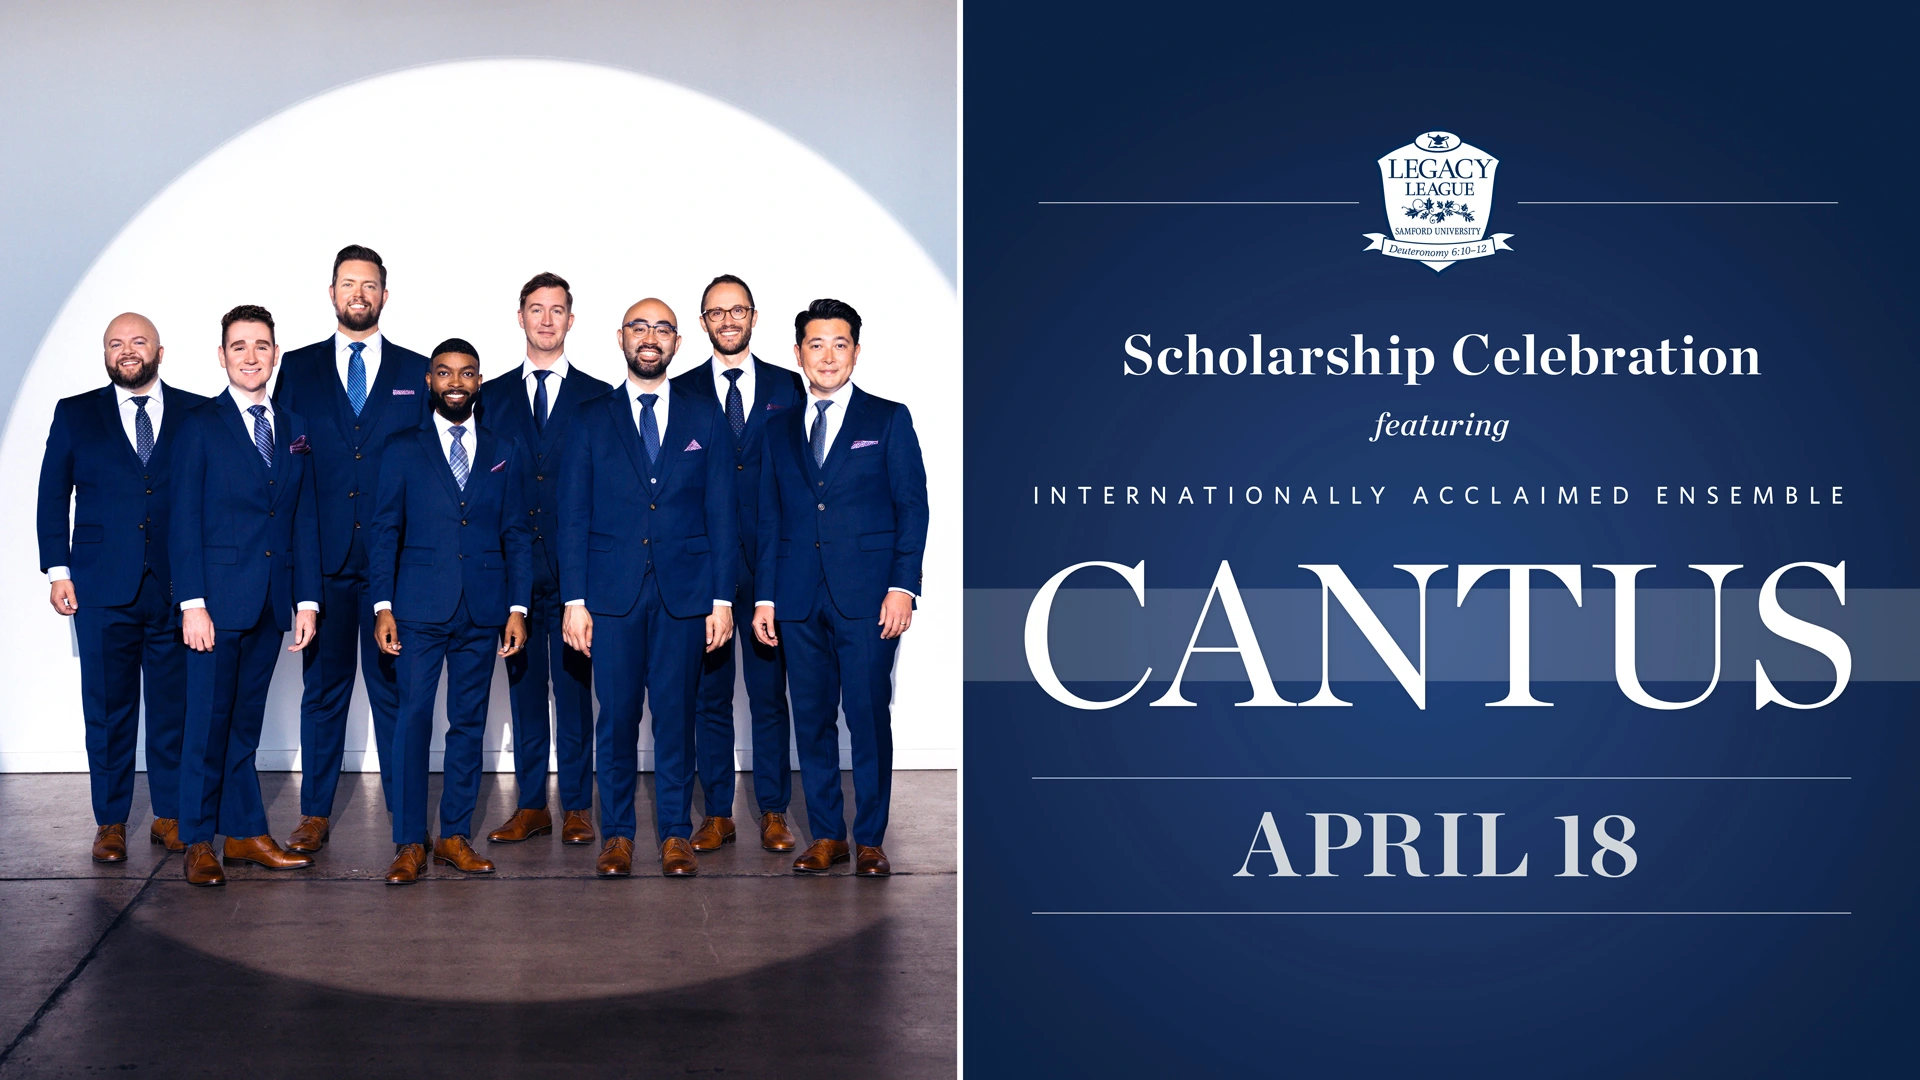 Scholarship Celebration featuring Cantus